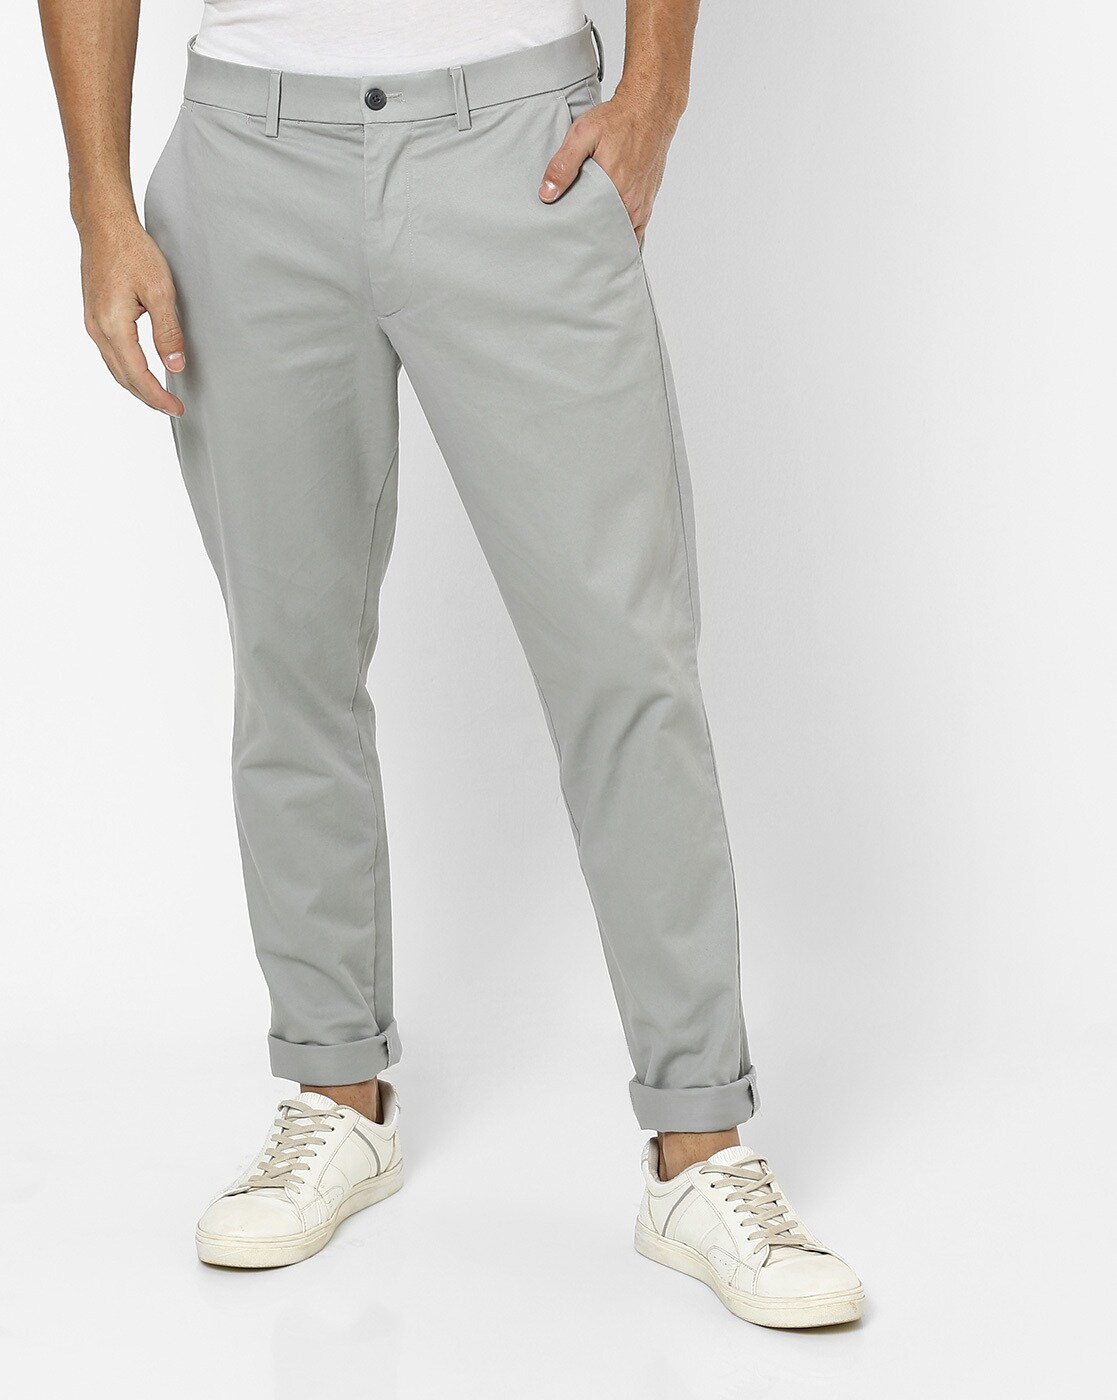 Buy Grey Trousers  Pants for Men by GAP Online  Ajiocom